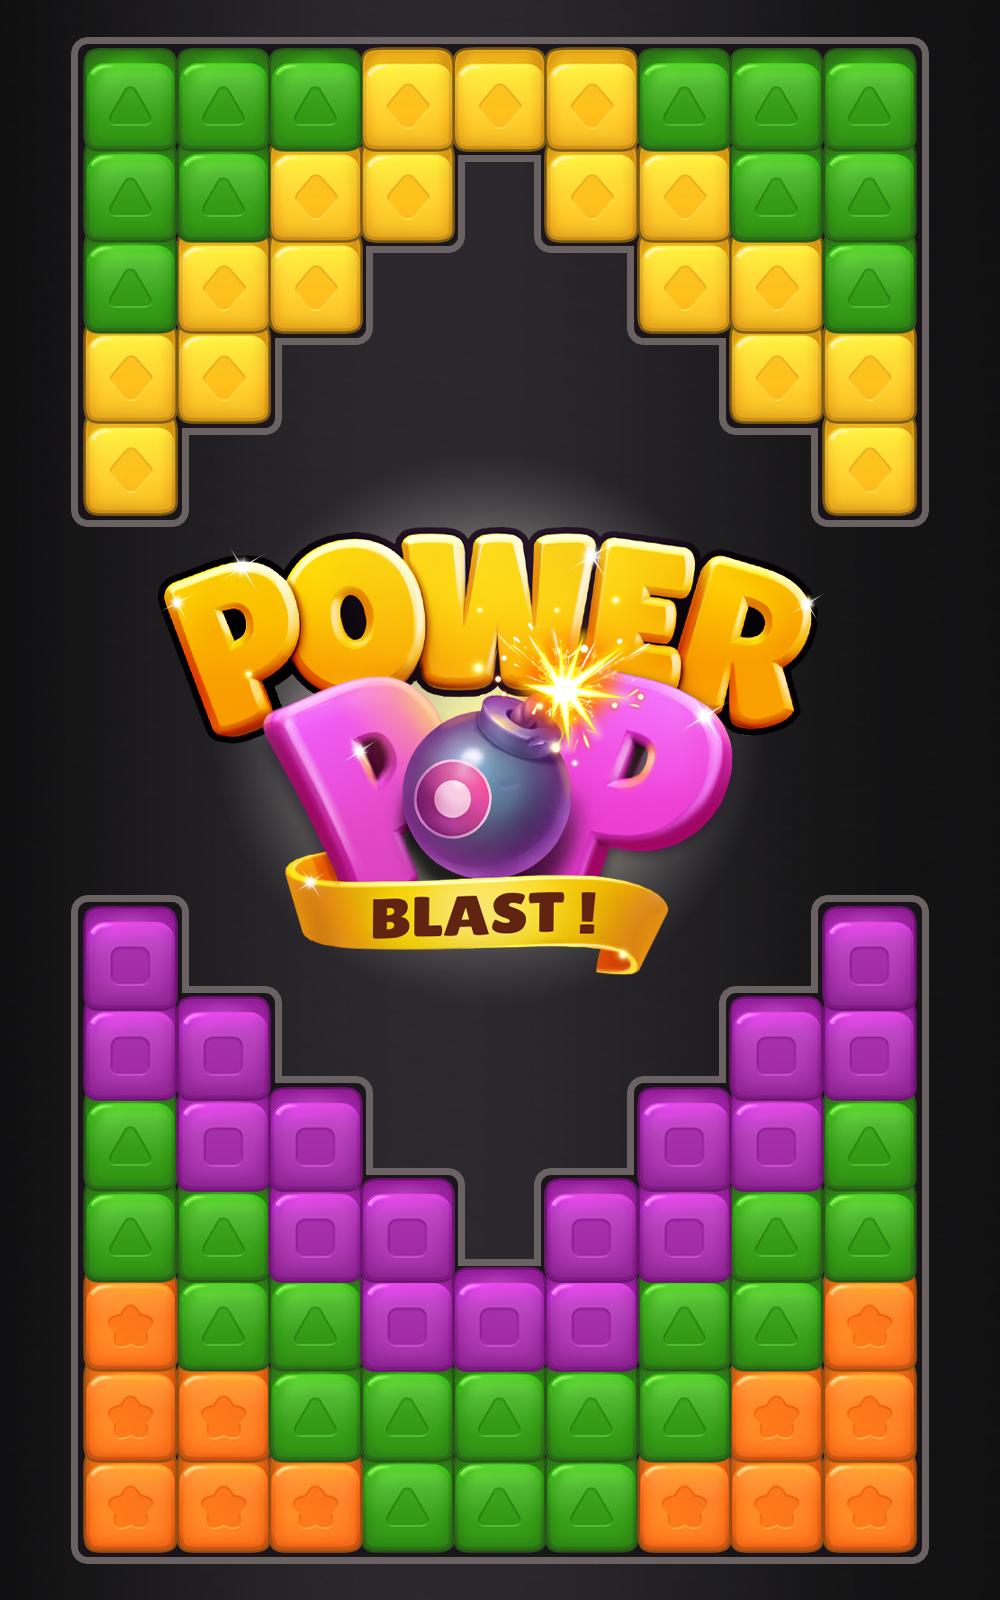 Pops blast. Fruit Cube Blast. Той Бласт игра картинки Power Pop BL.